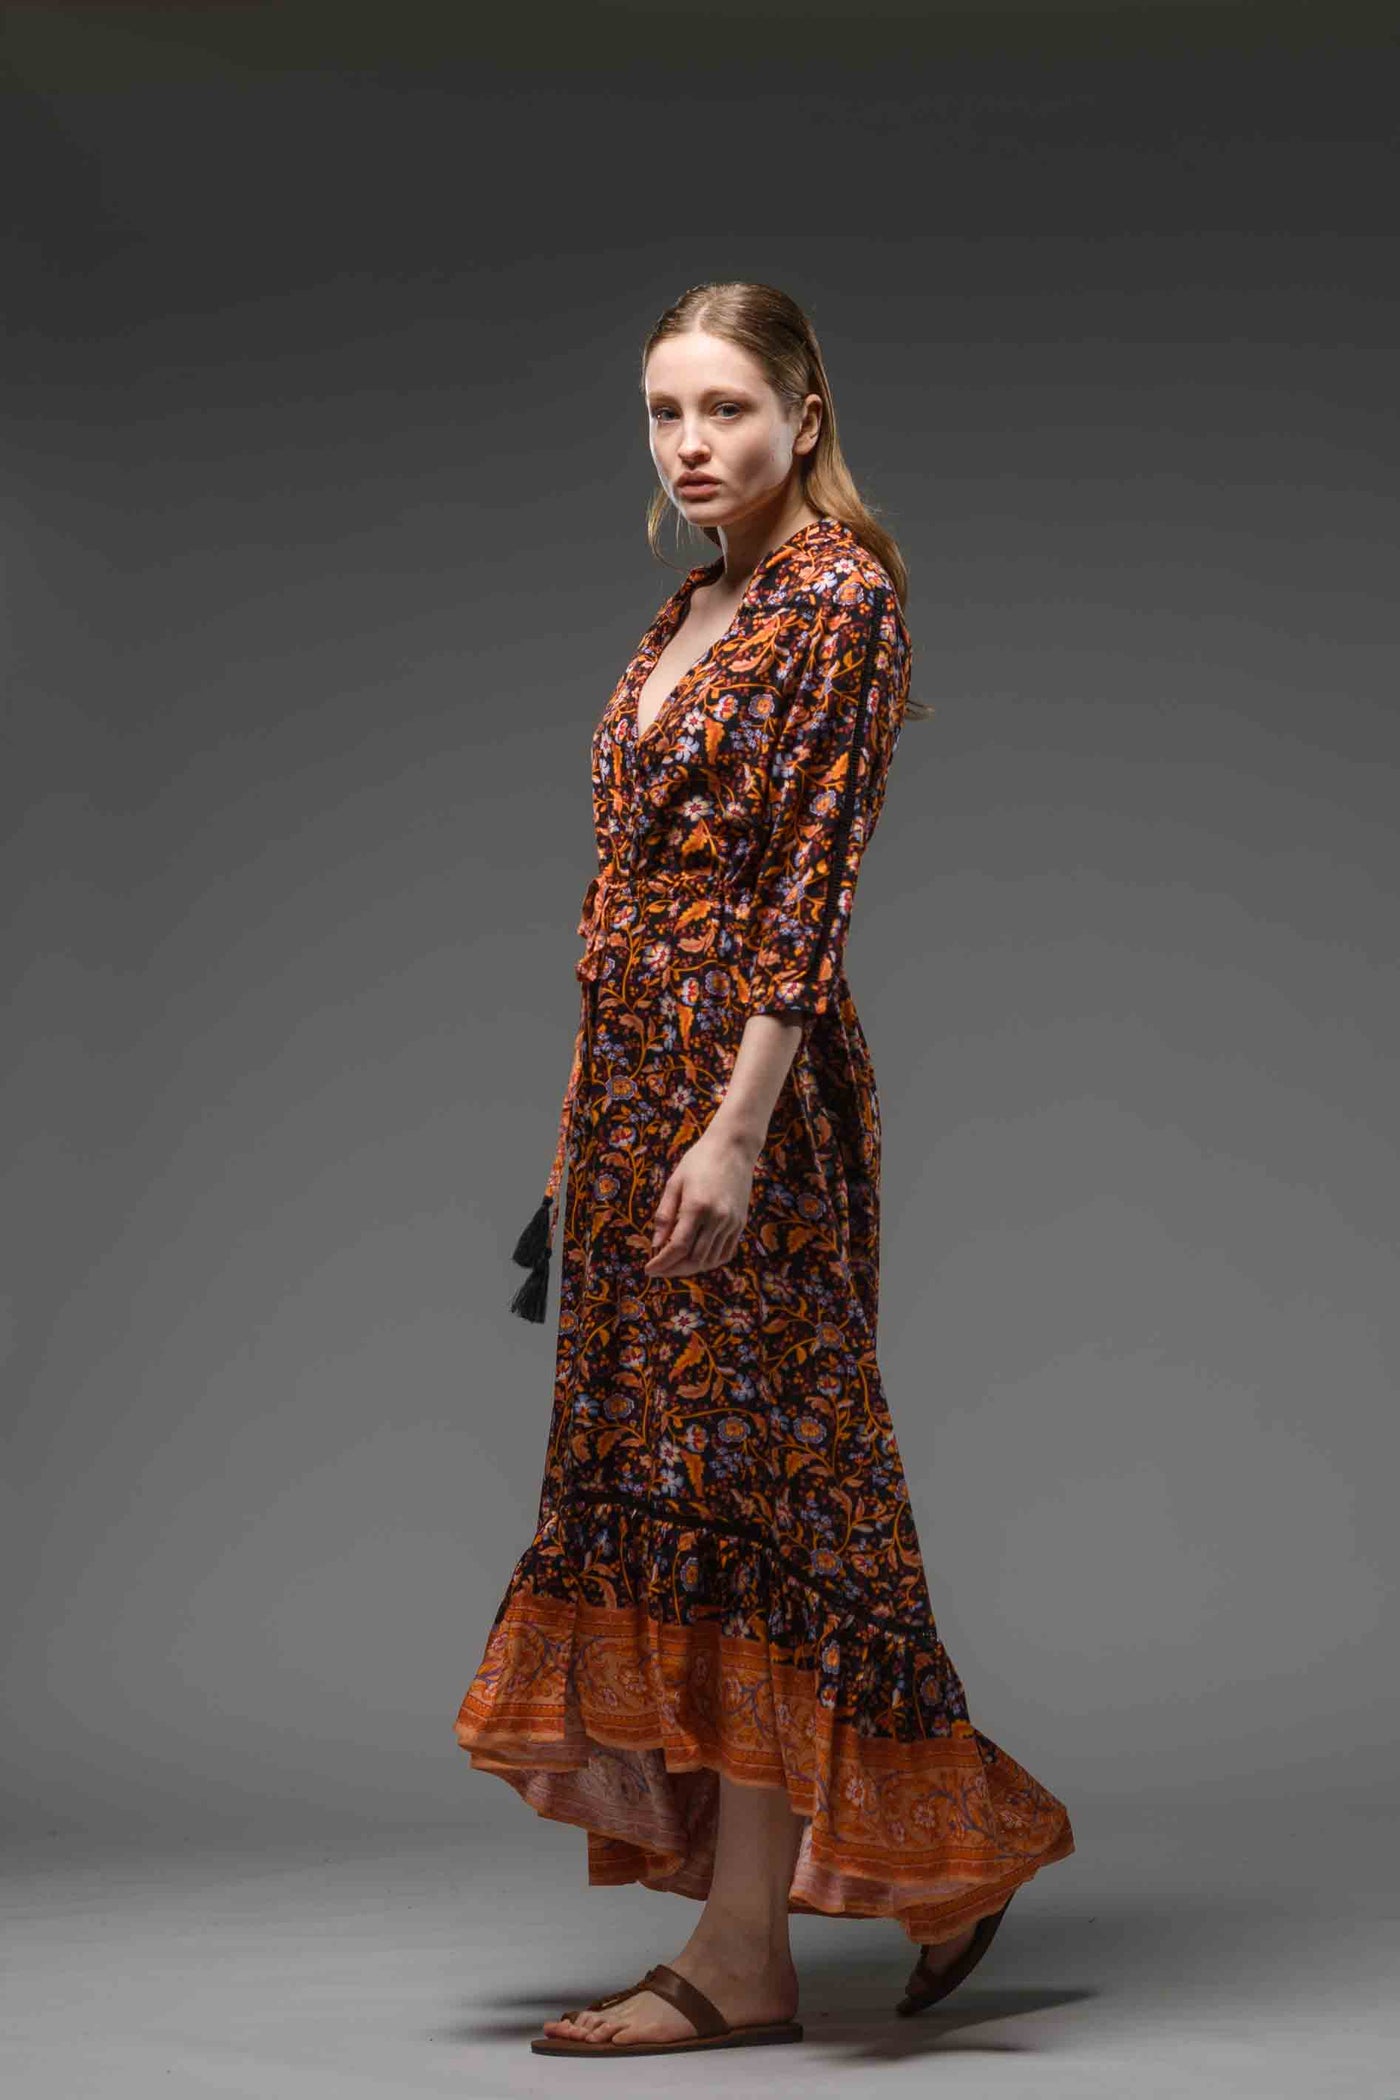 Black orange floral border print asymmetric ruffled V-neckline self tie waist bohemian chic long dress